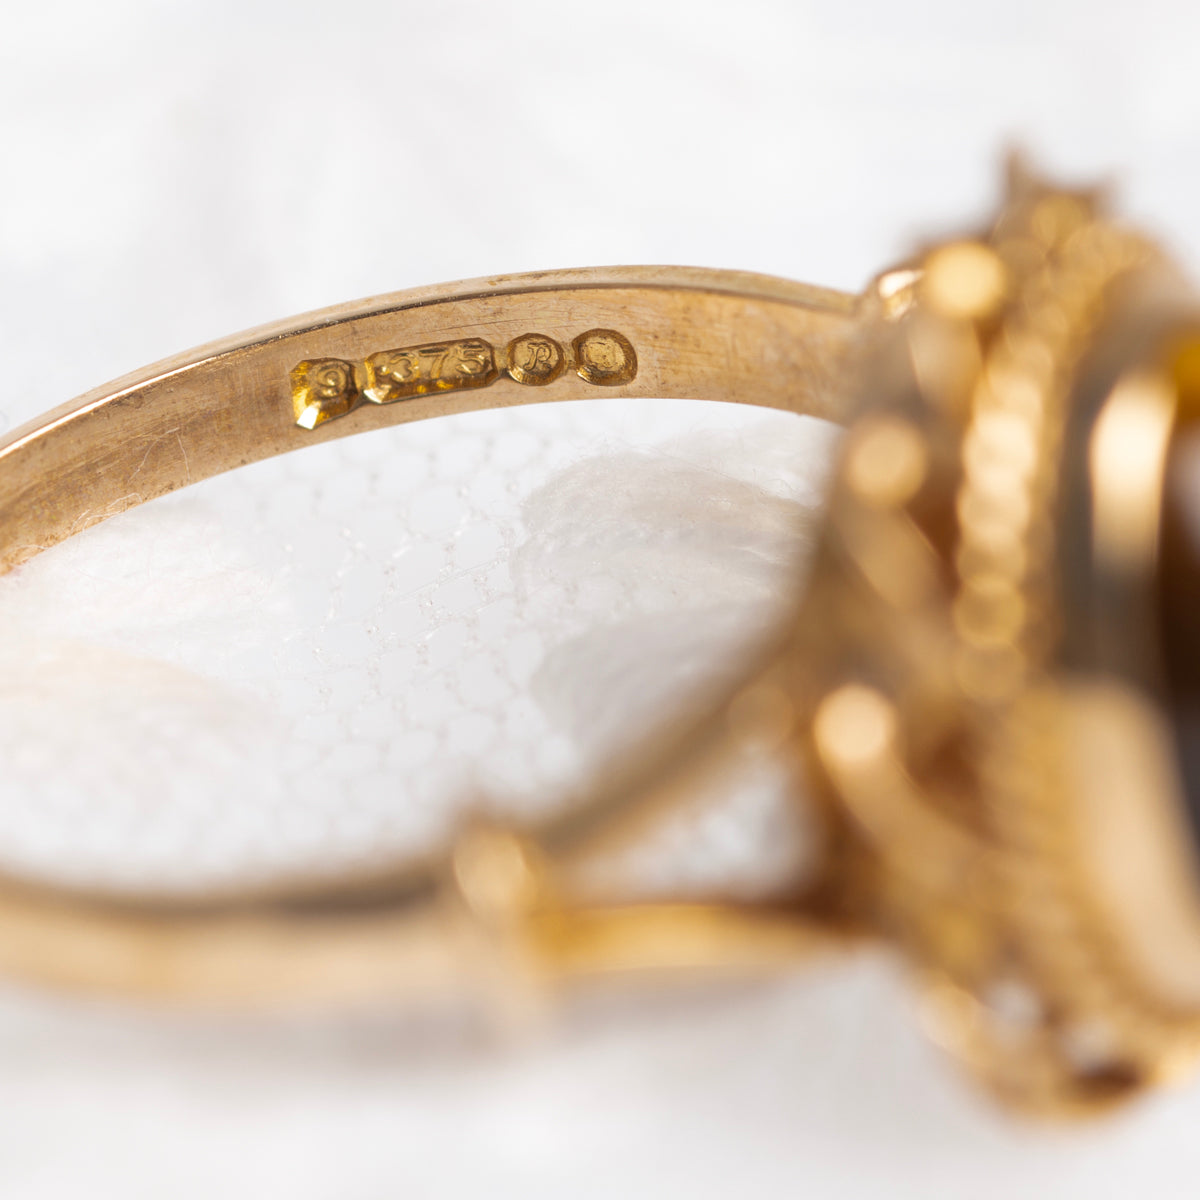 Vintage Tigers Eye Gemstone Ring 9ct Gold Rope Twist Mount Retro Jewelry (A1428)